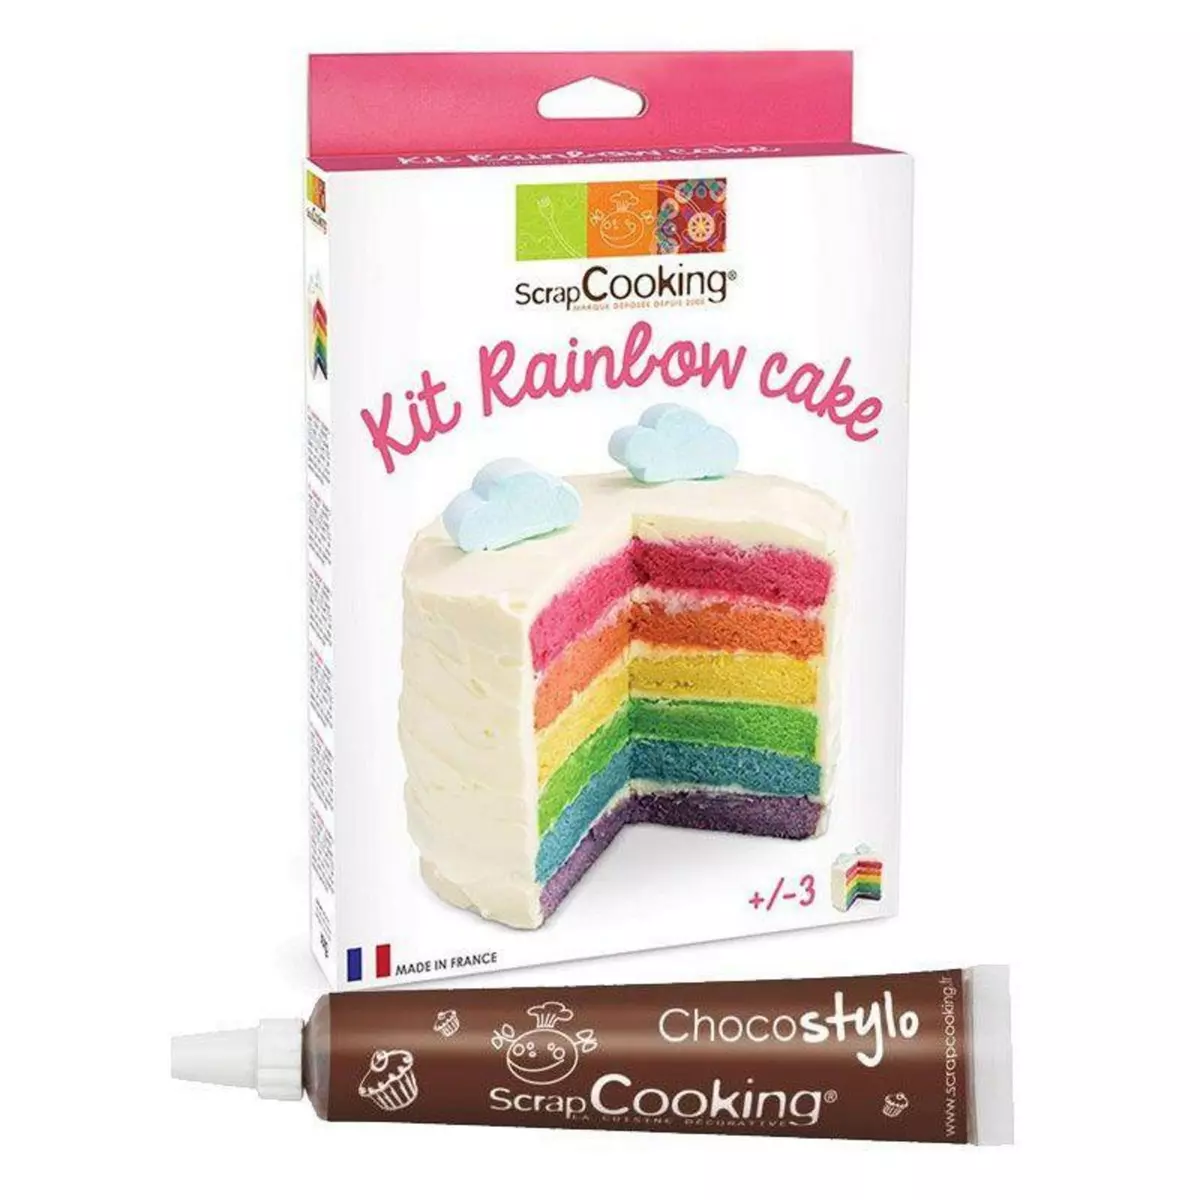 SCRAPCOOKING Kit Rainbow Cake + 1 Stylo chocolat